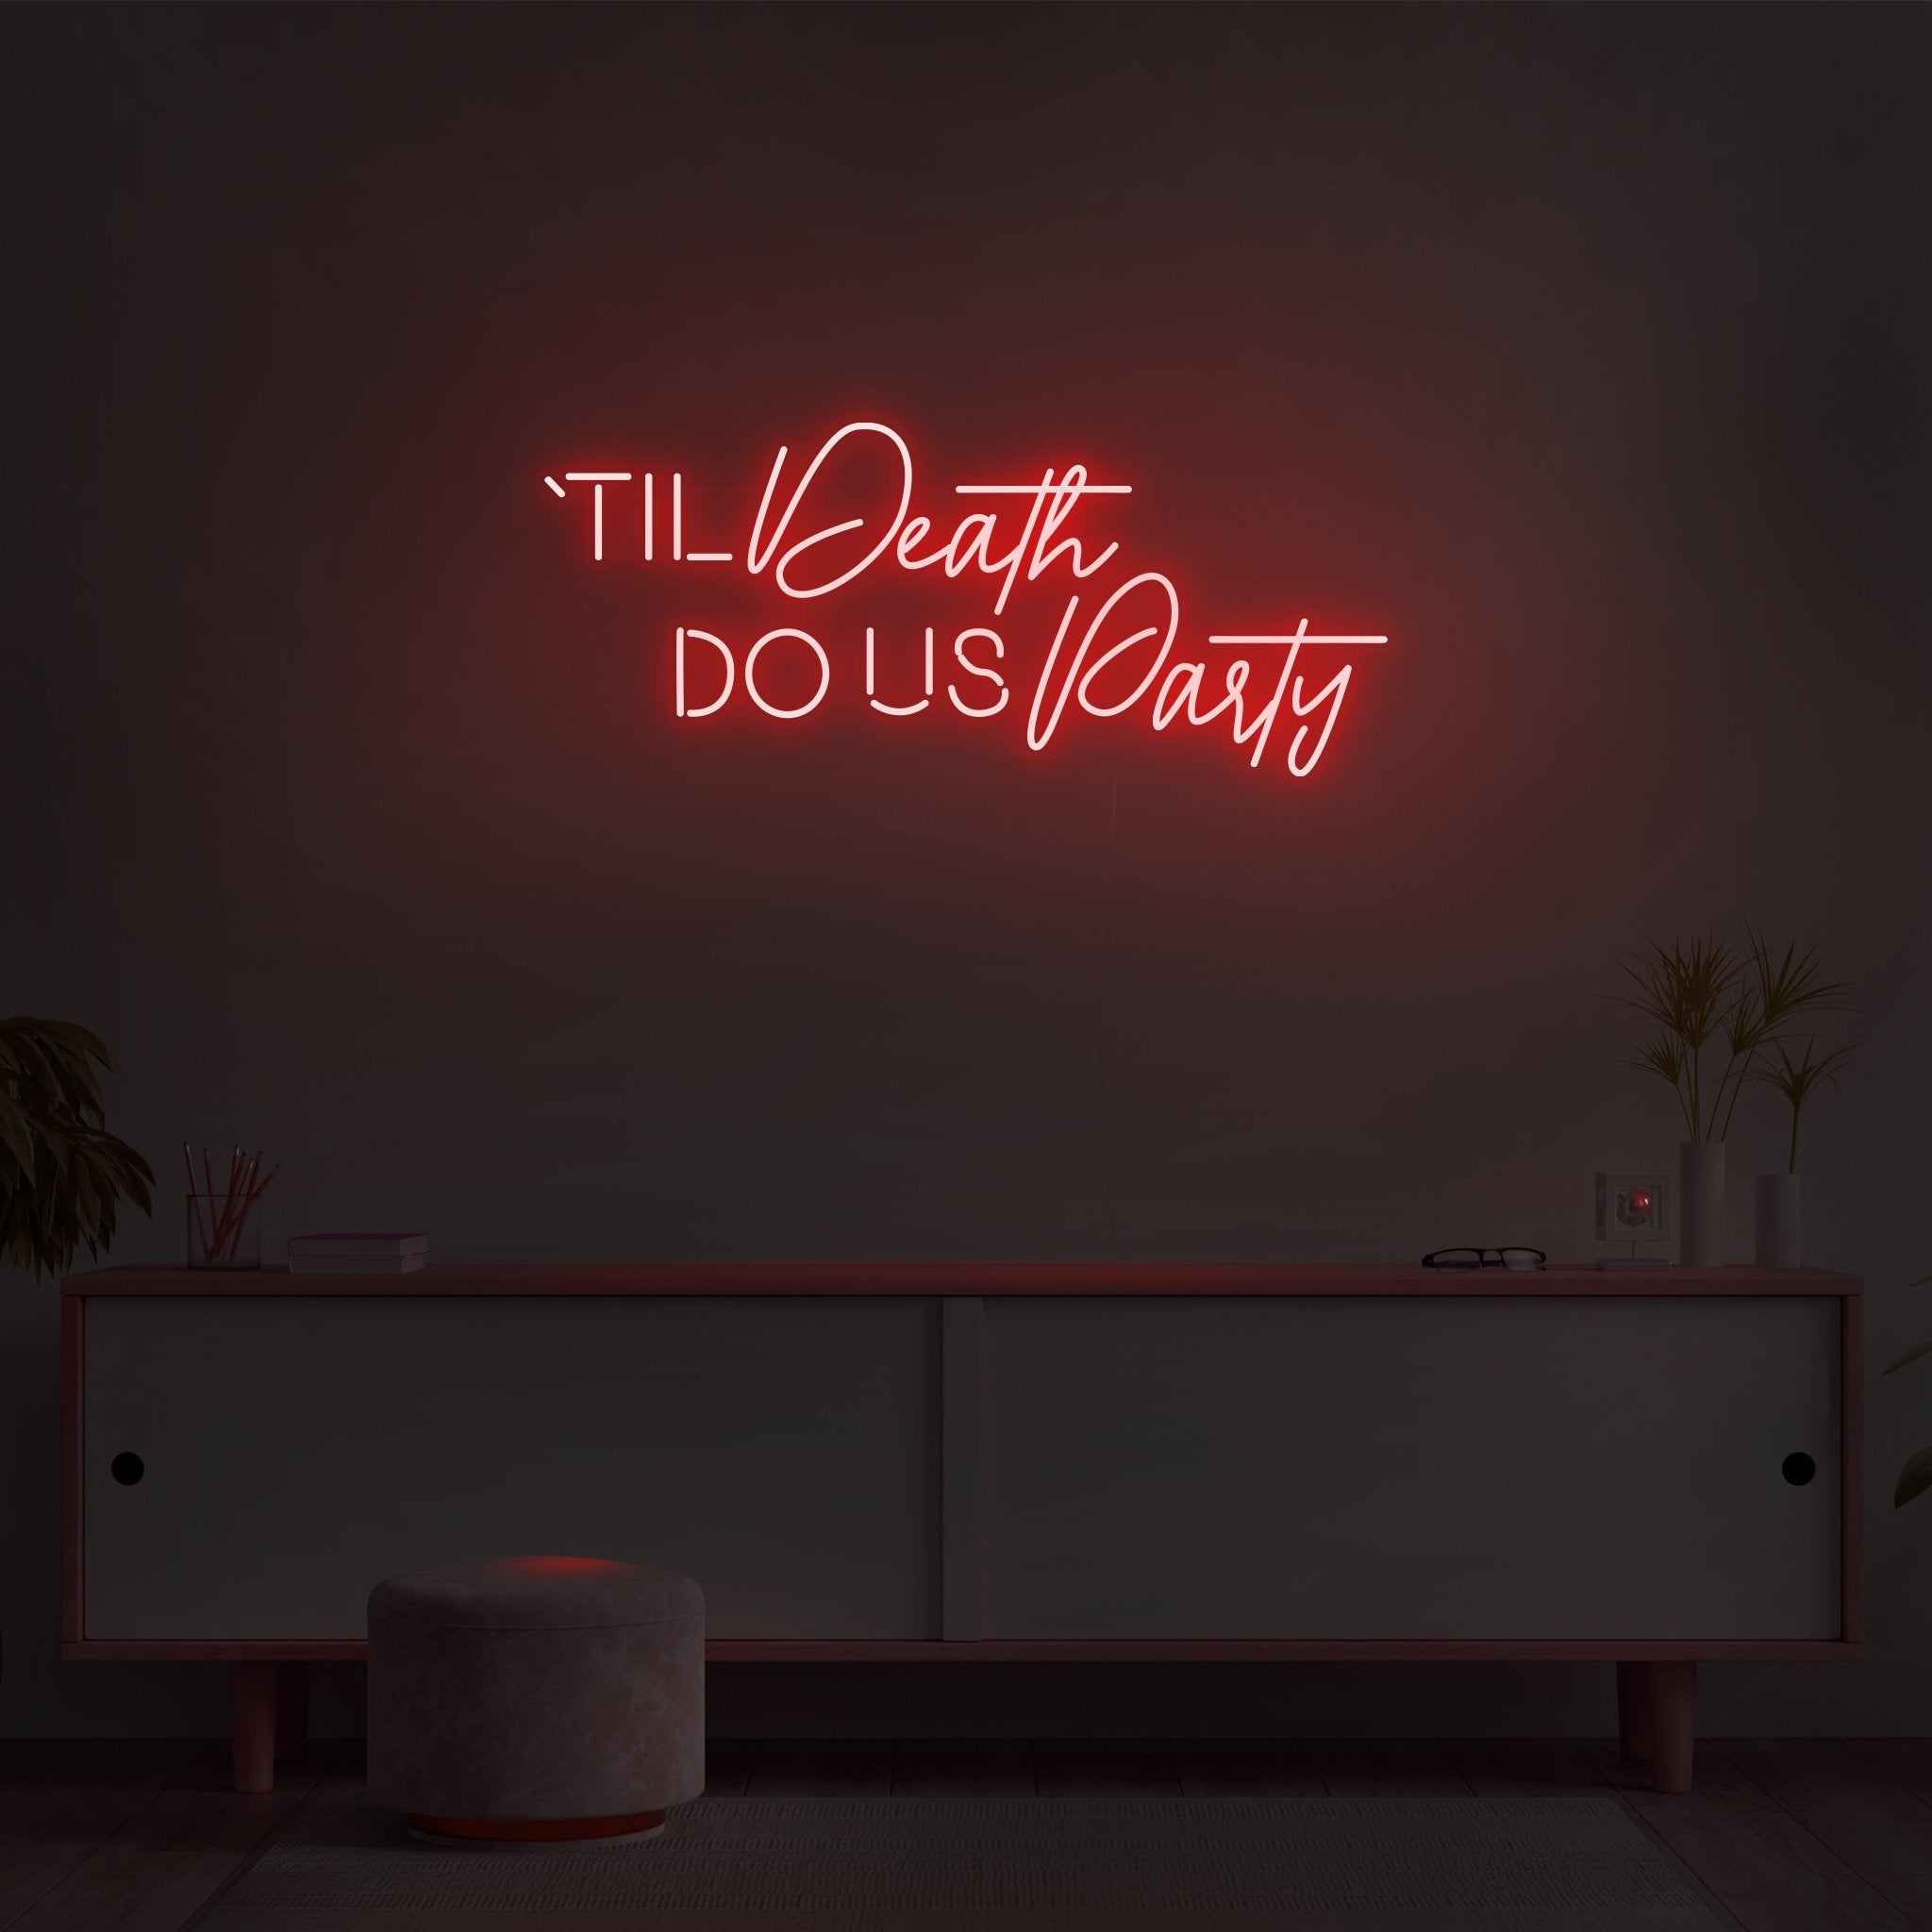 Til' Death Do Us Party - NeonFerry